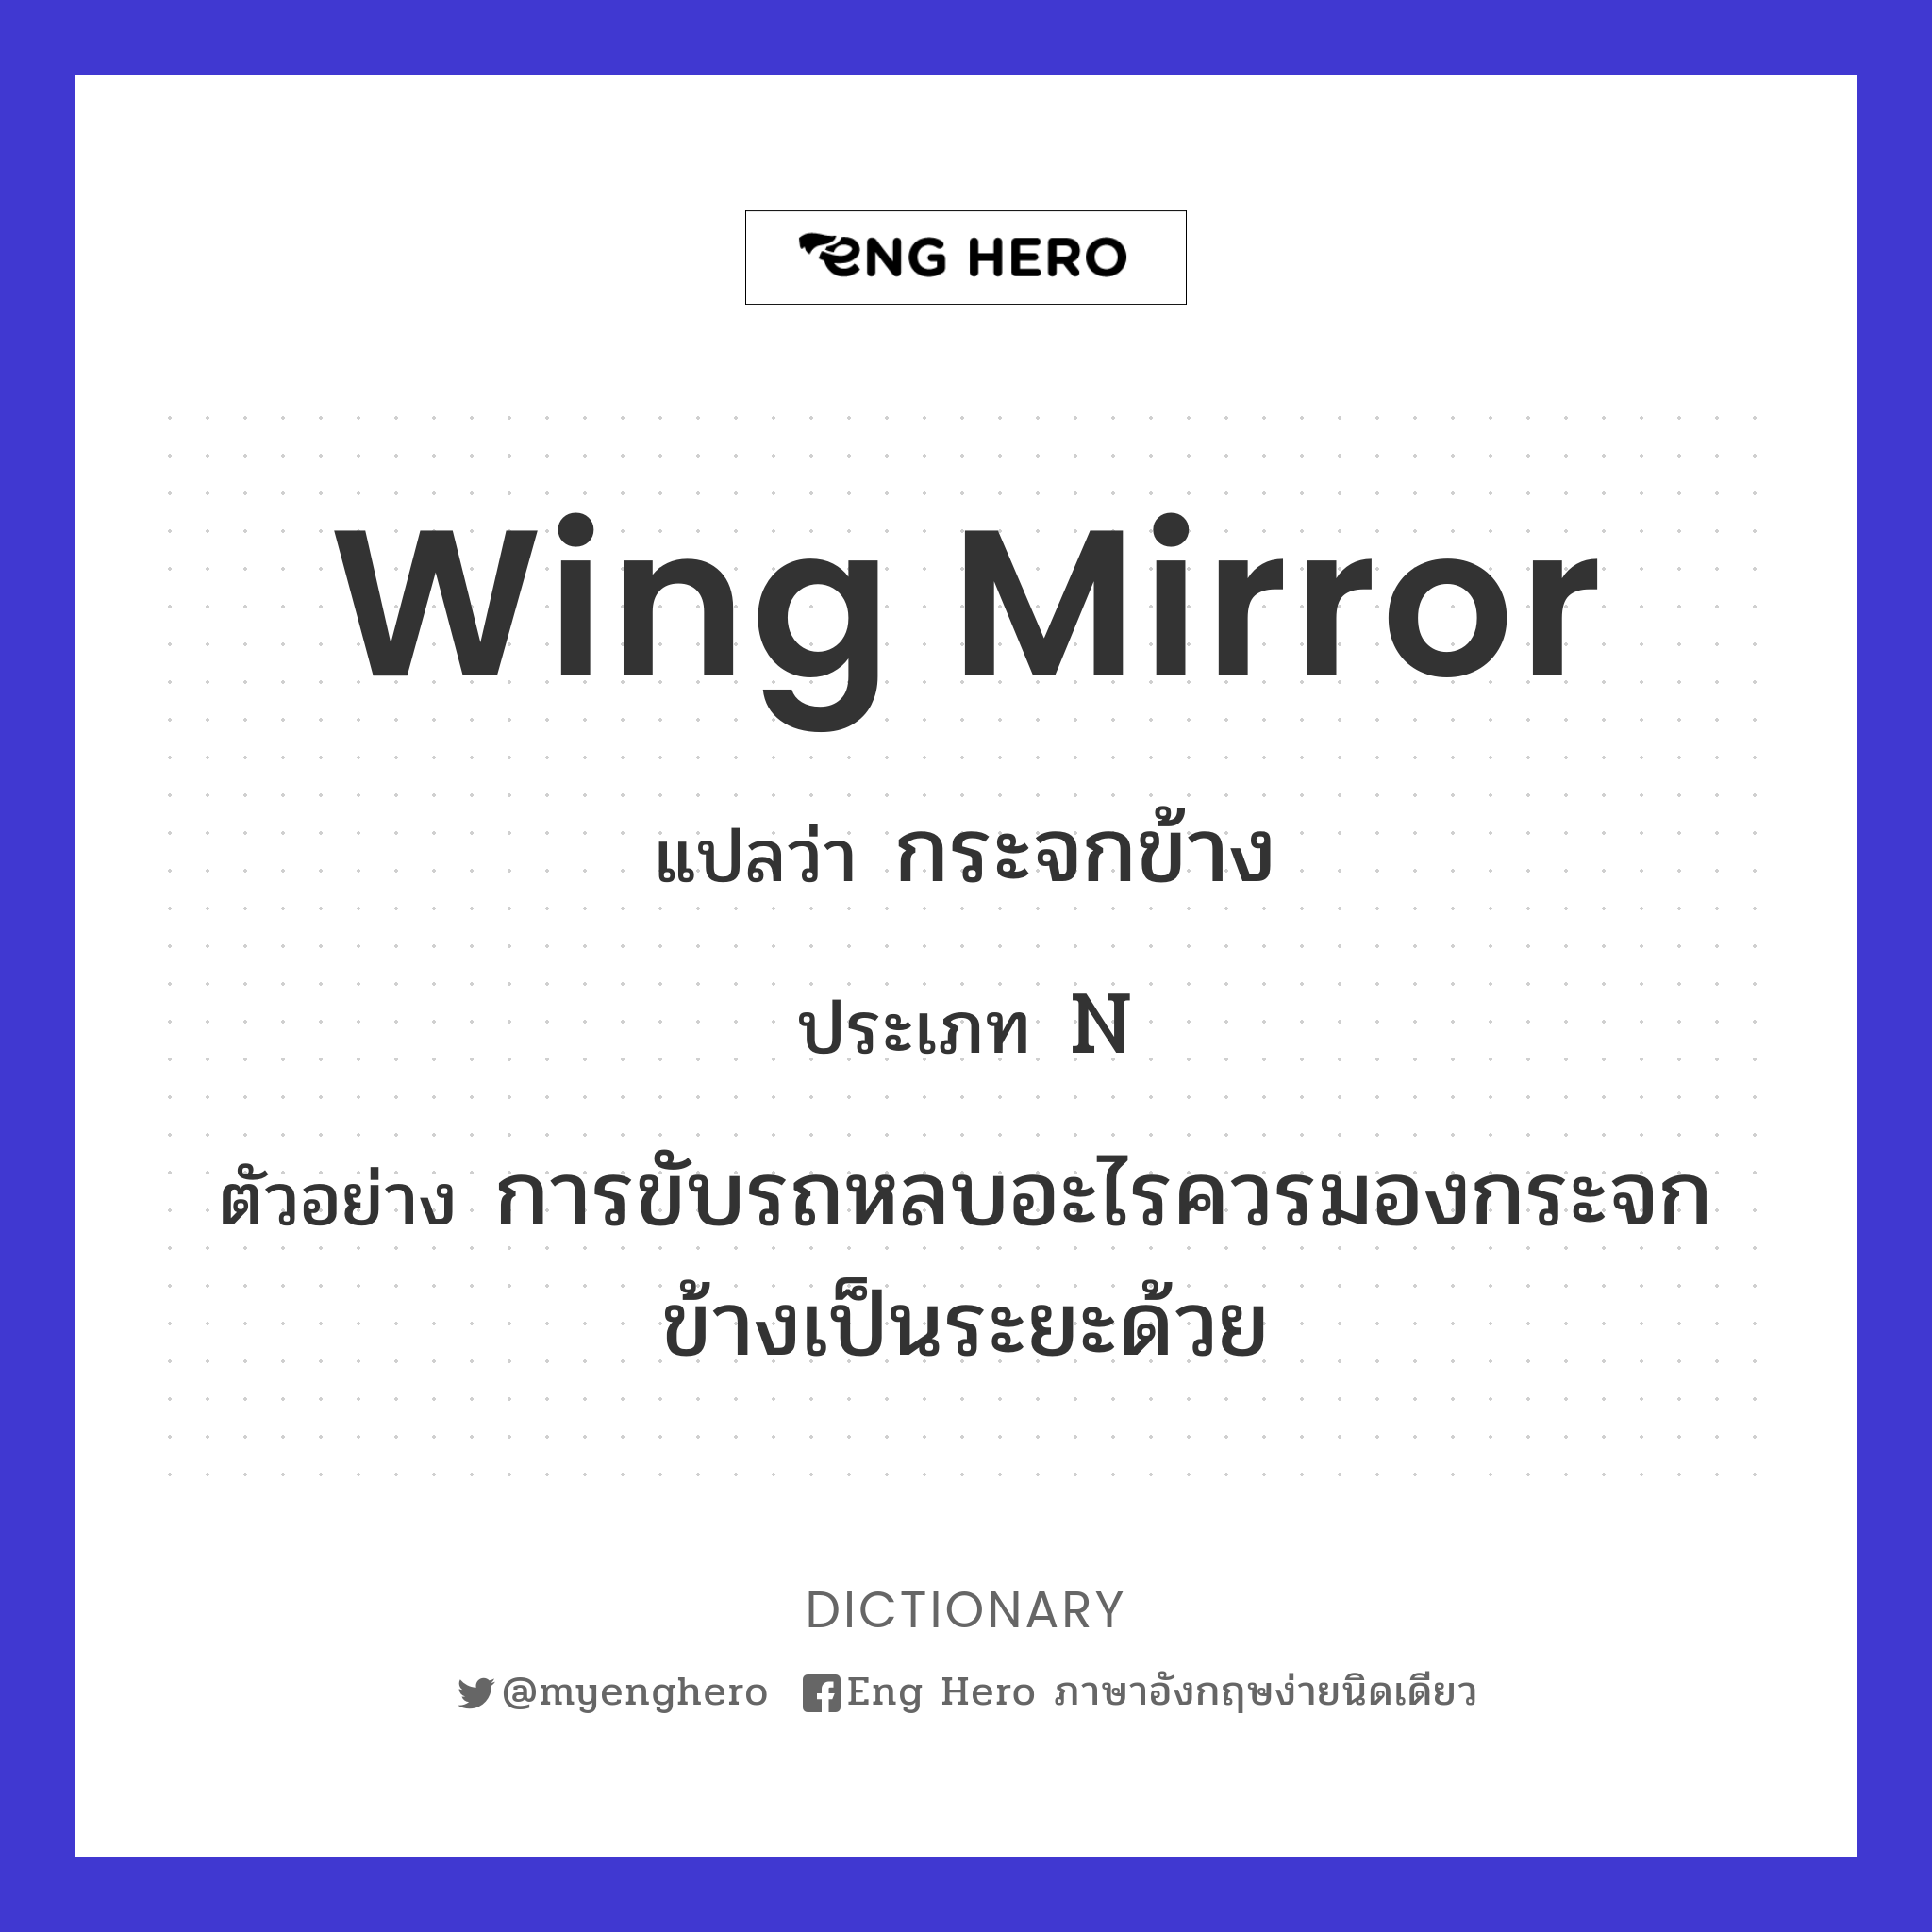 wing mirror